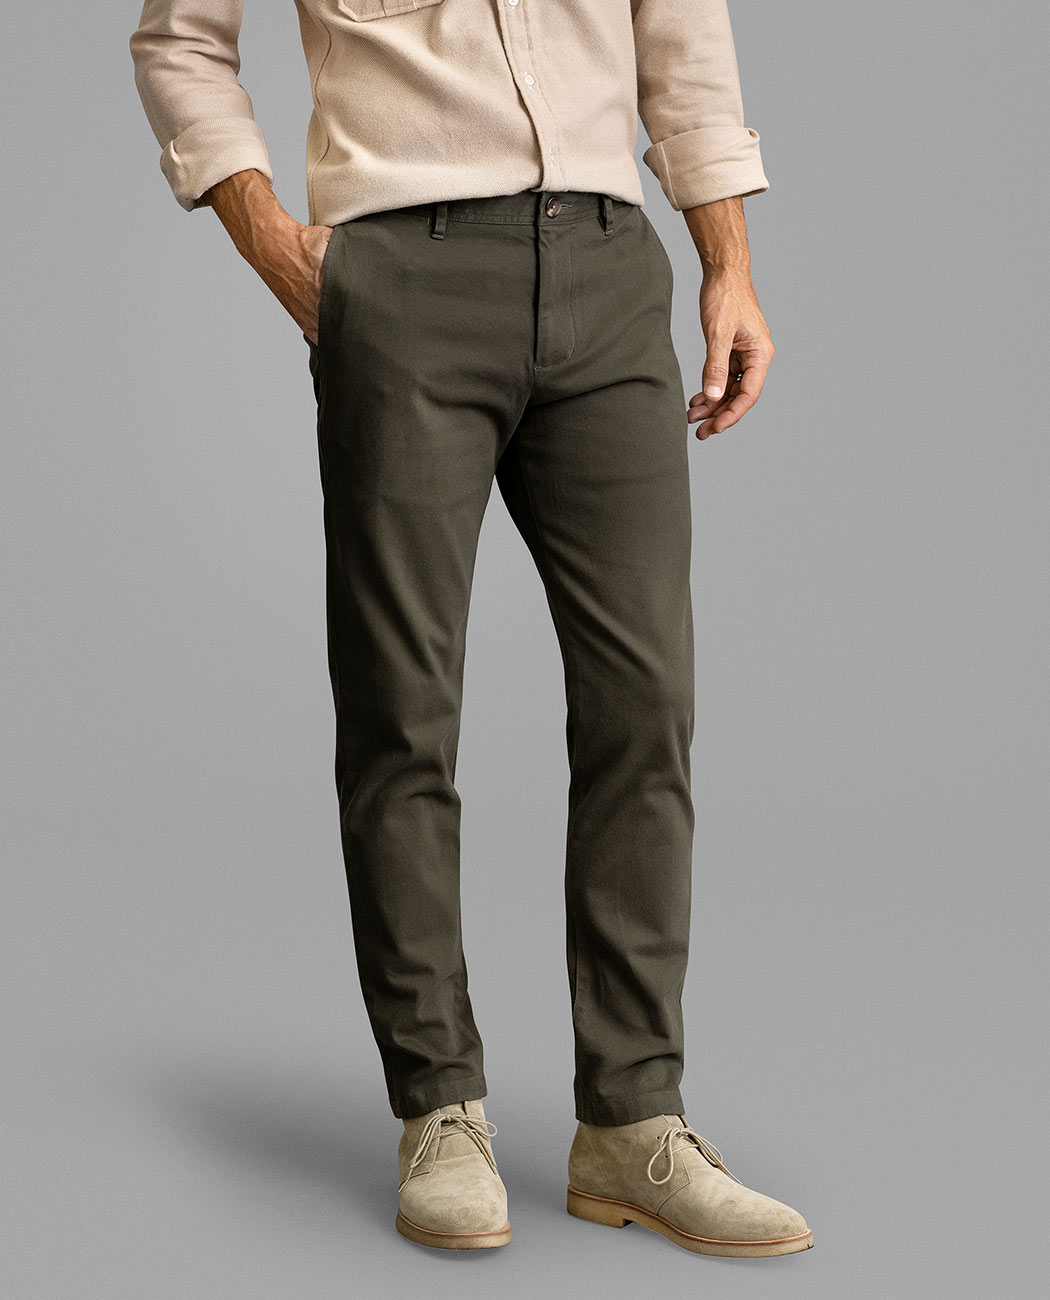 Shop Custom Pants | Men's Chinos Pants - Proper Cloth